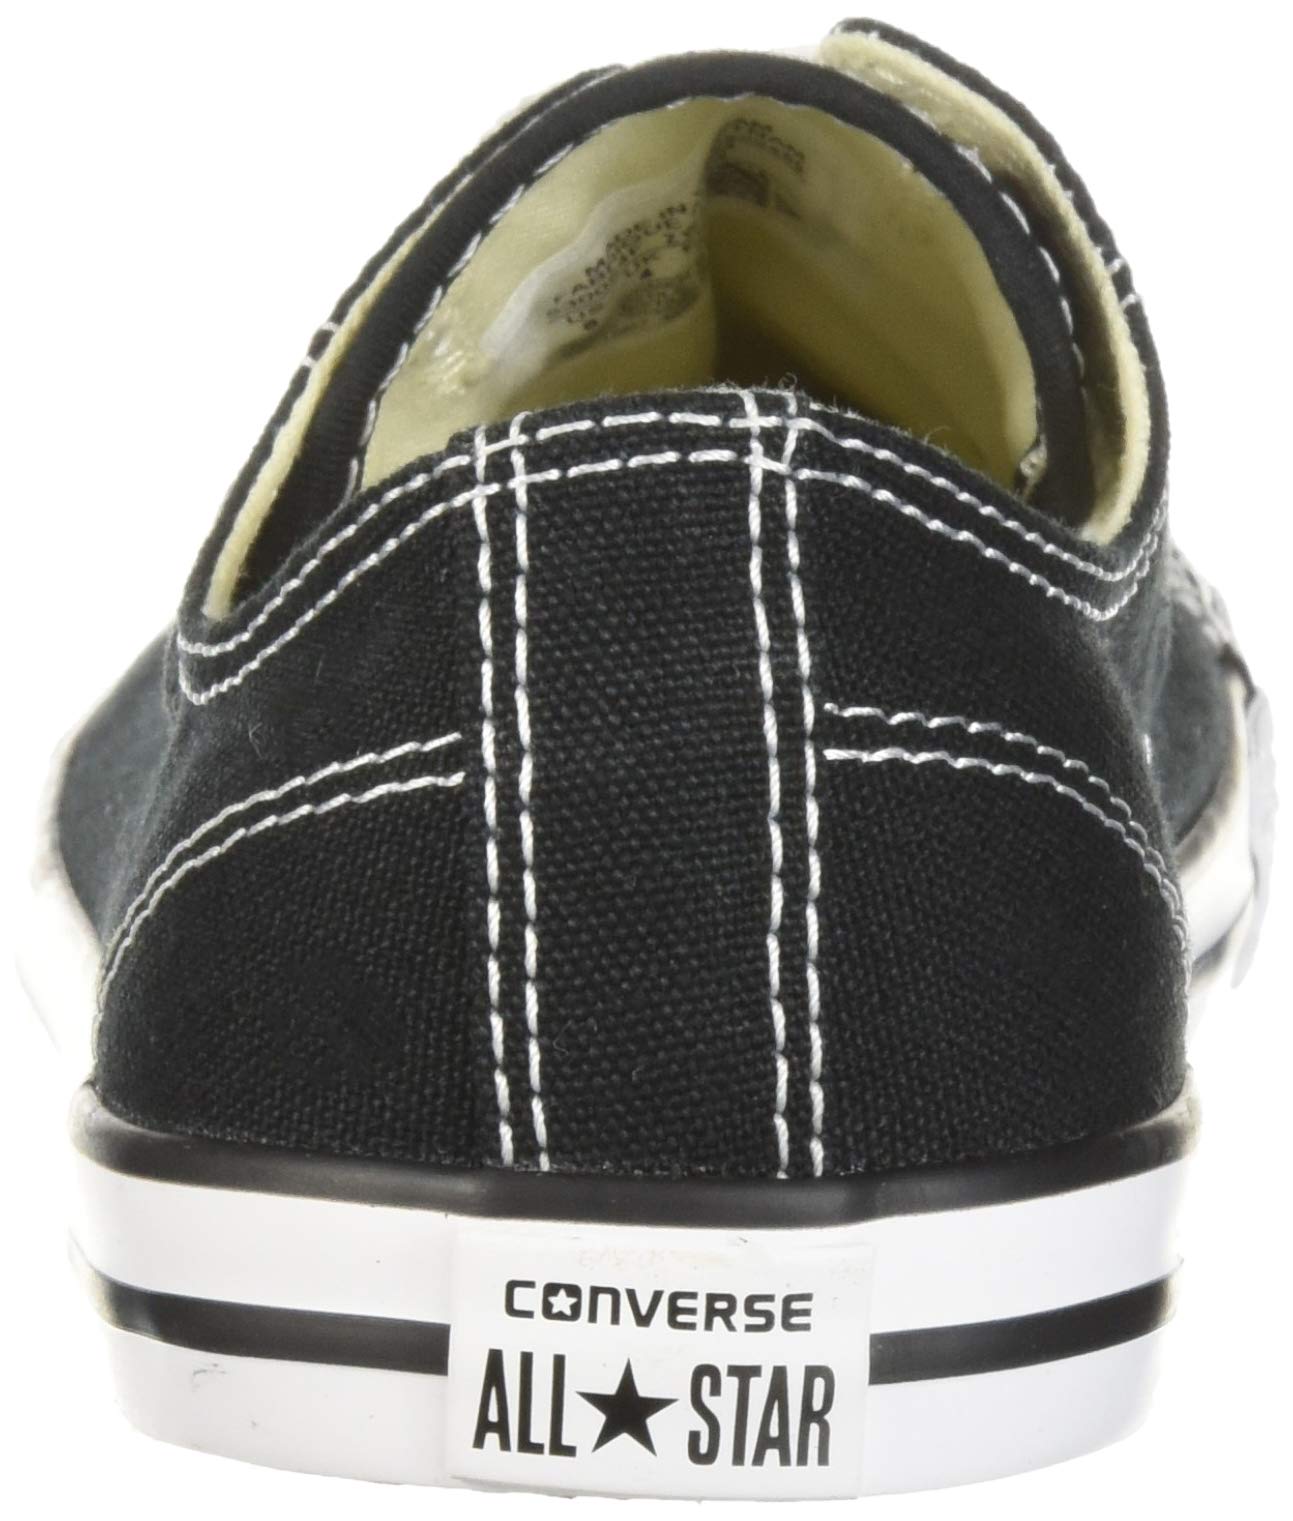 Converse Unisex-Adult Chuck Taylor All Star Season Hi Sneaker